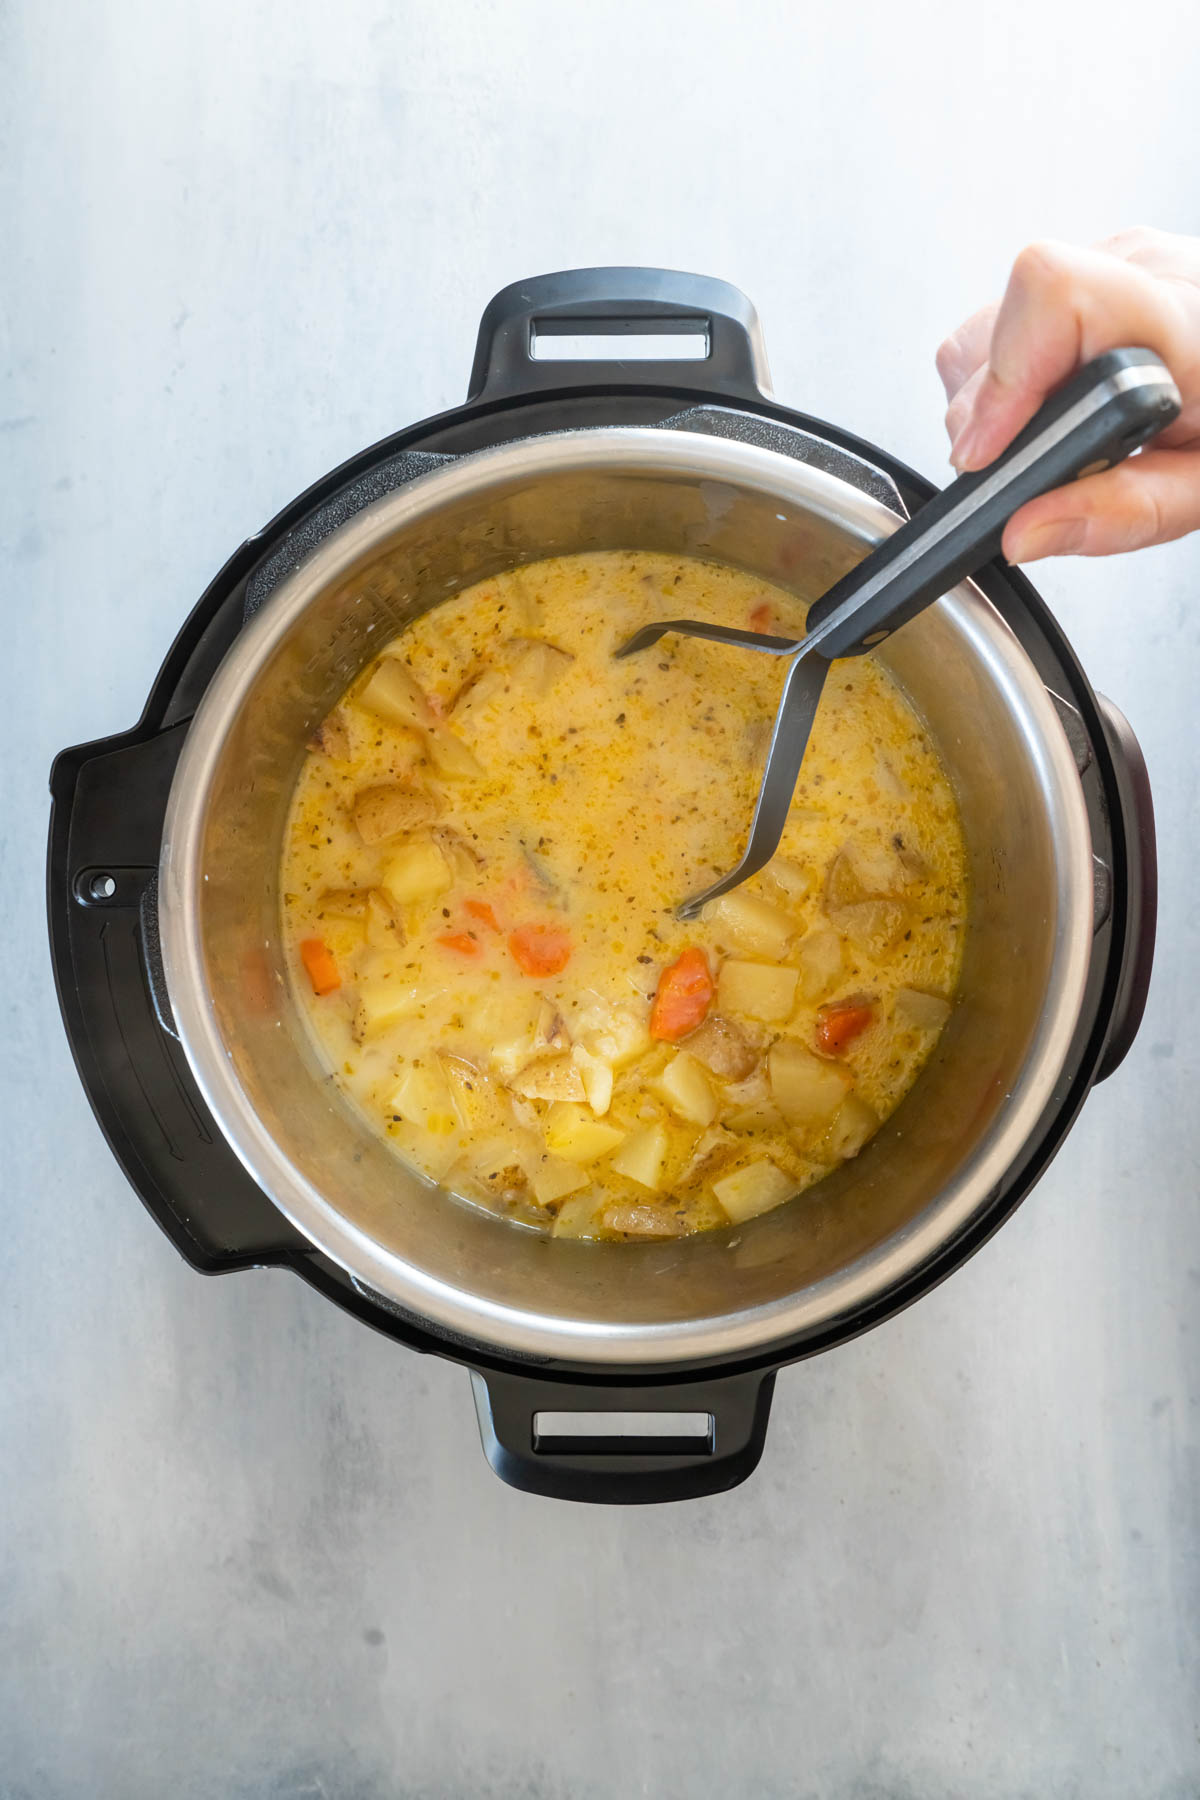 Mashing soup with potato masher.